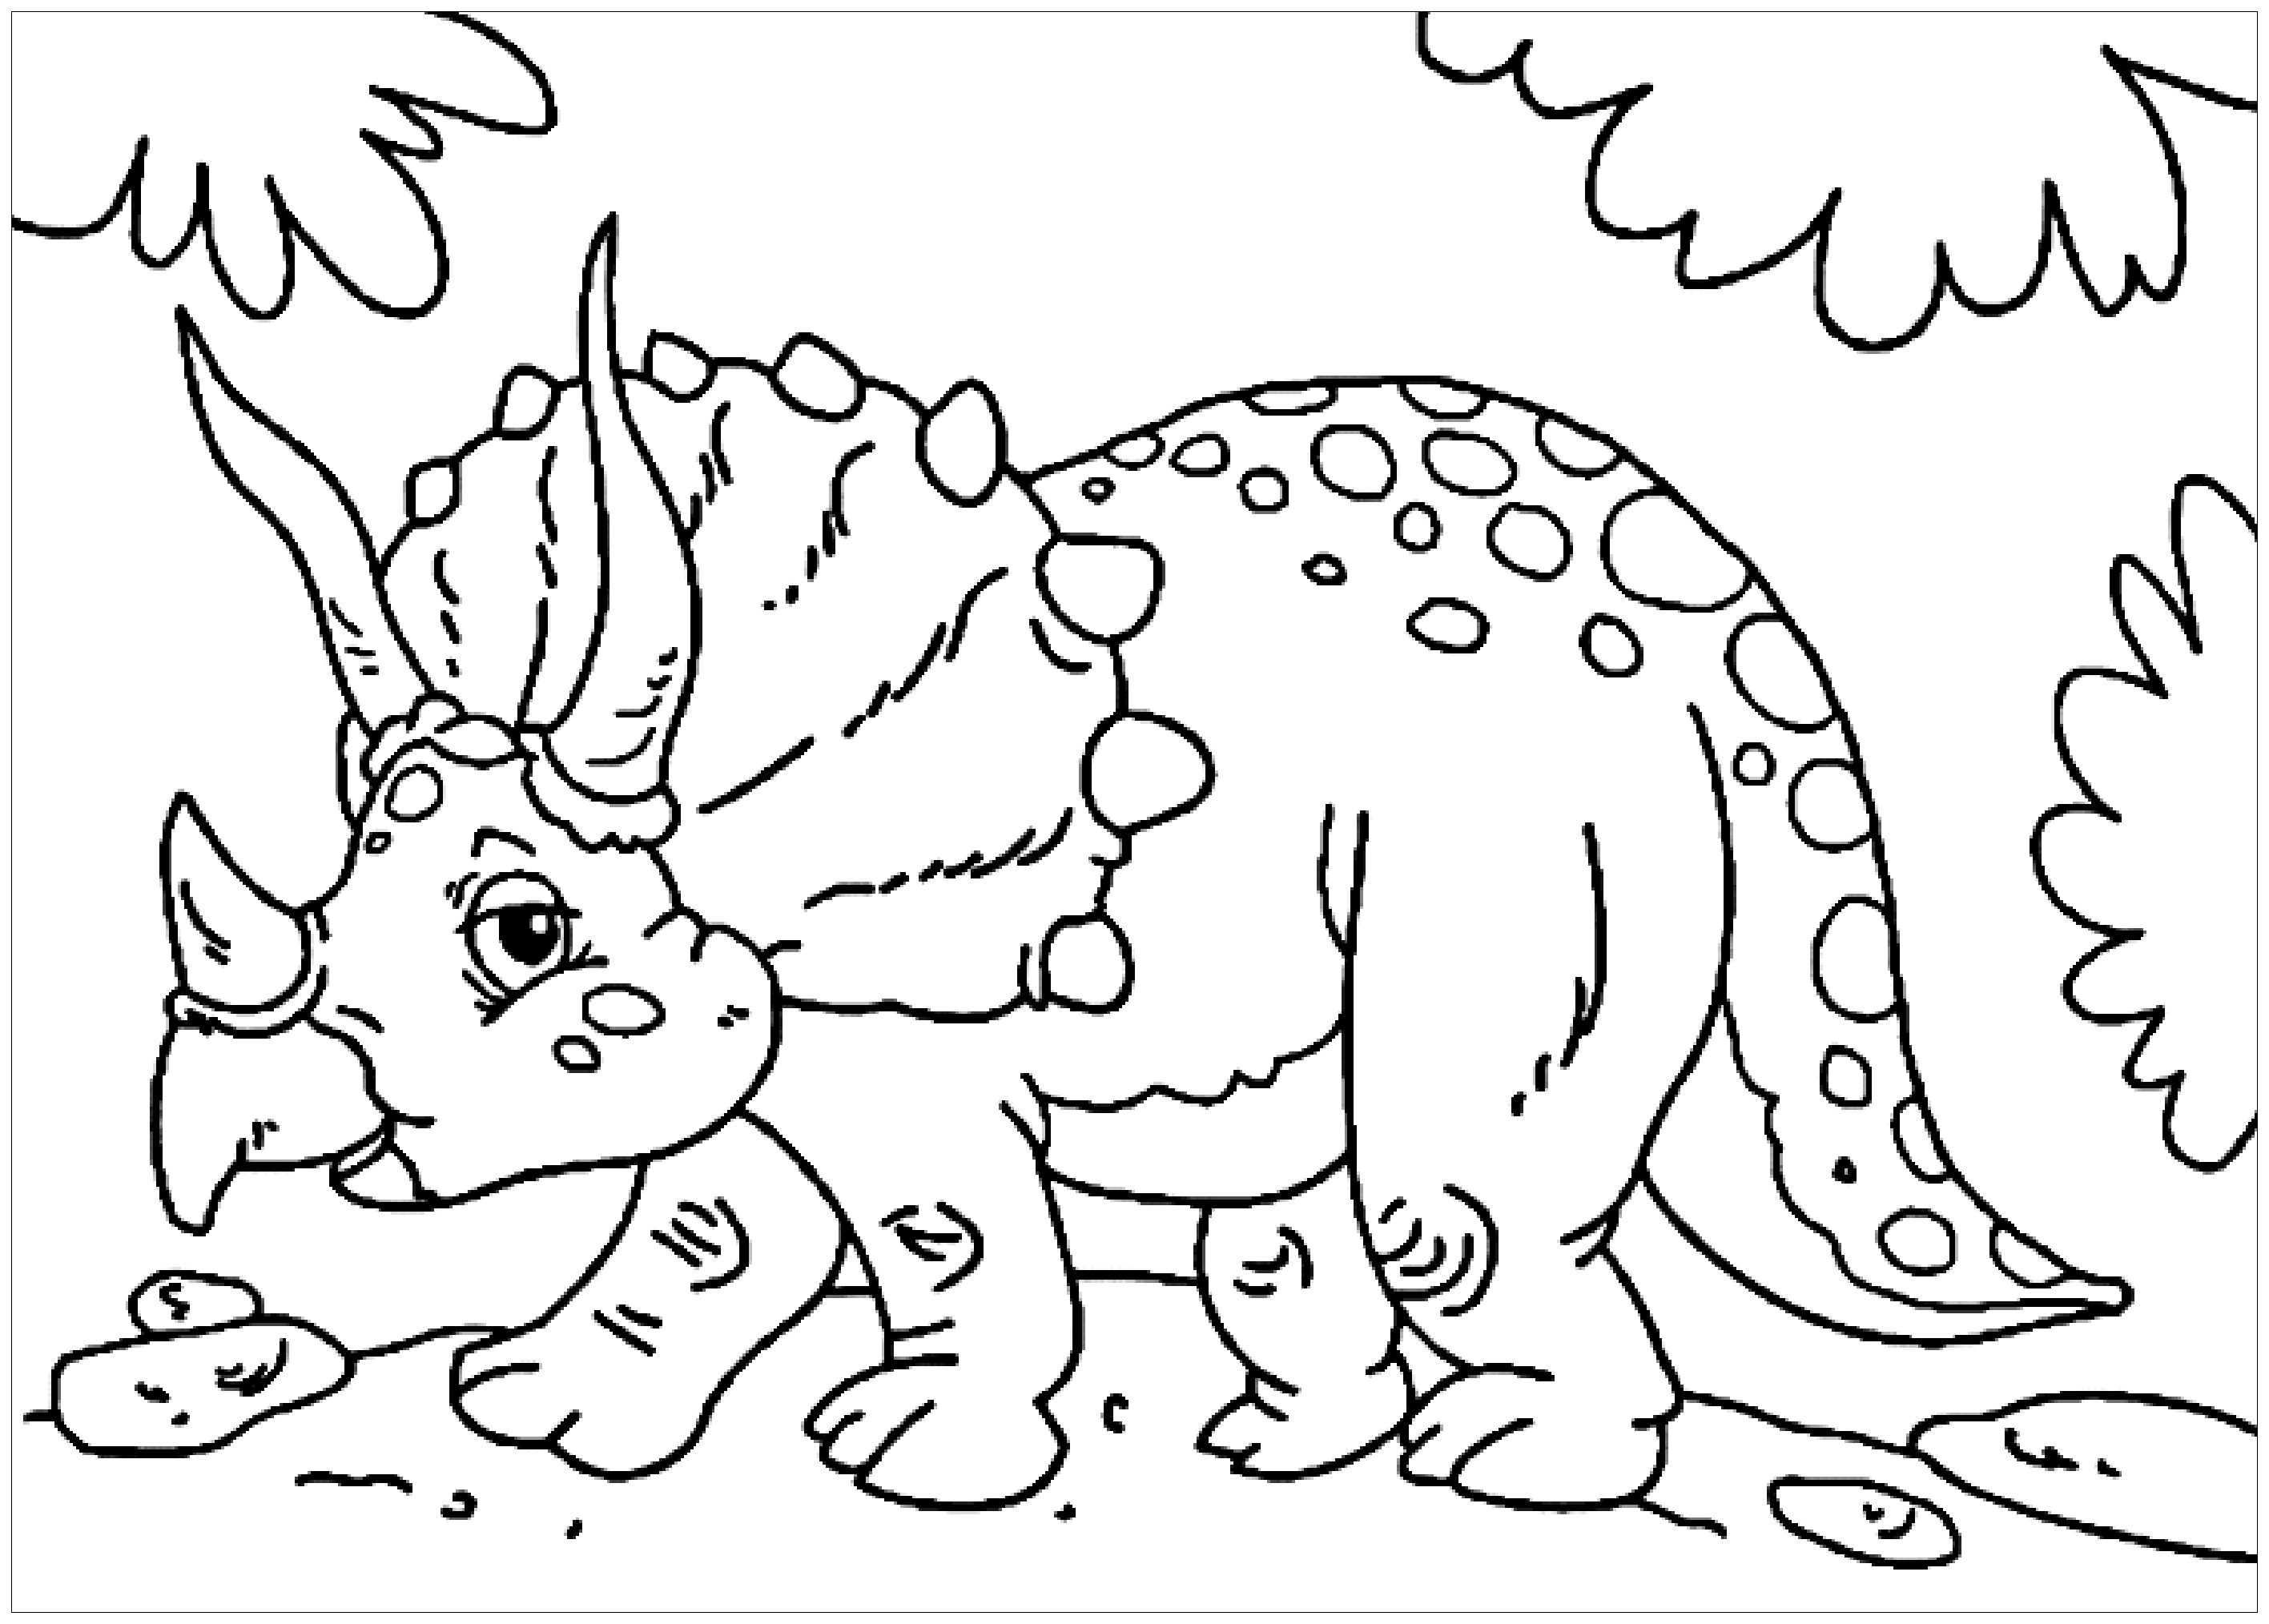 Este triceratops está de paseo